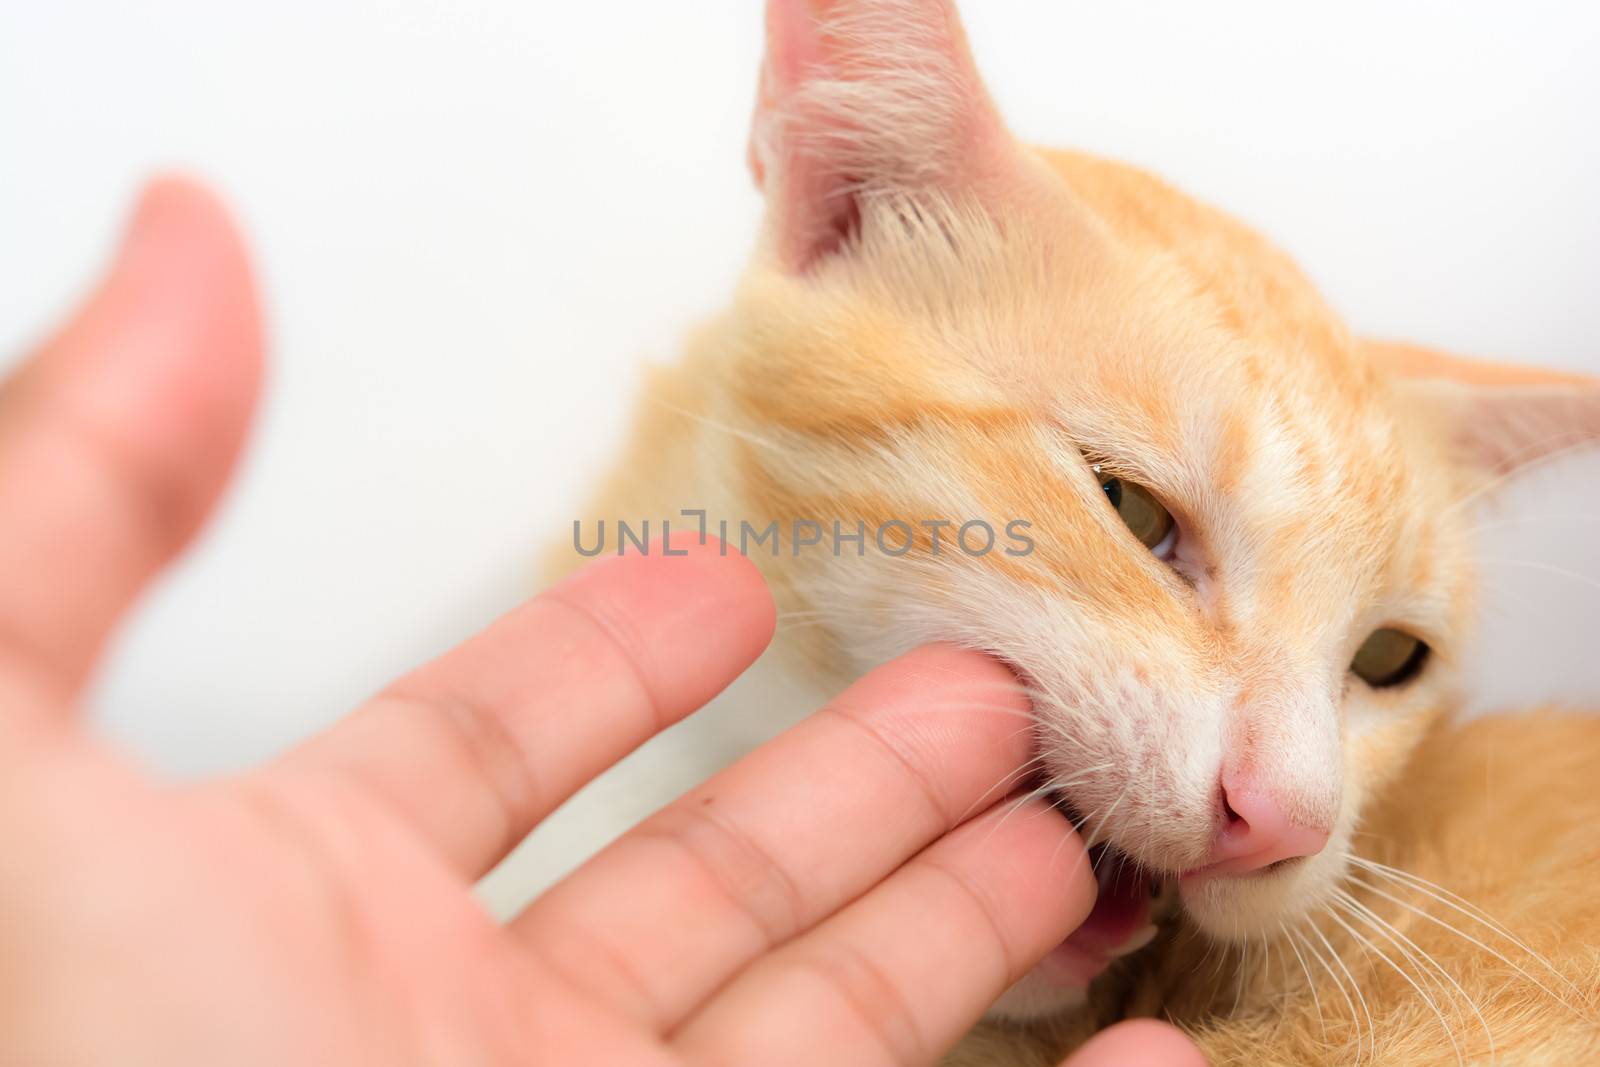 cat biting a hand by Sorapop